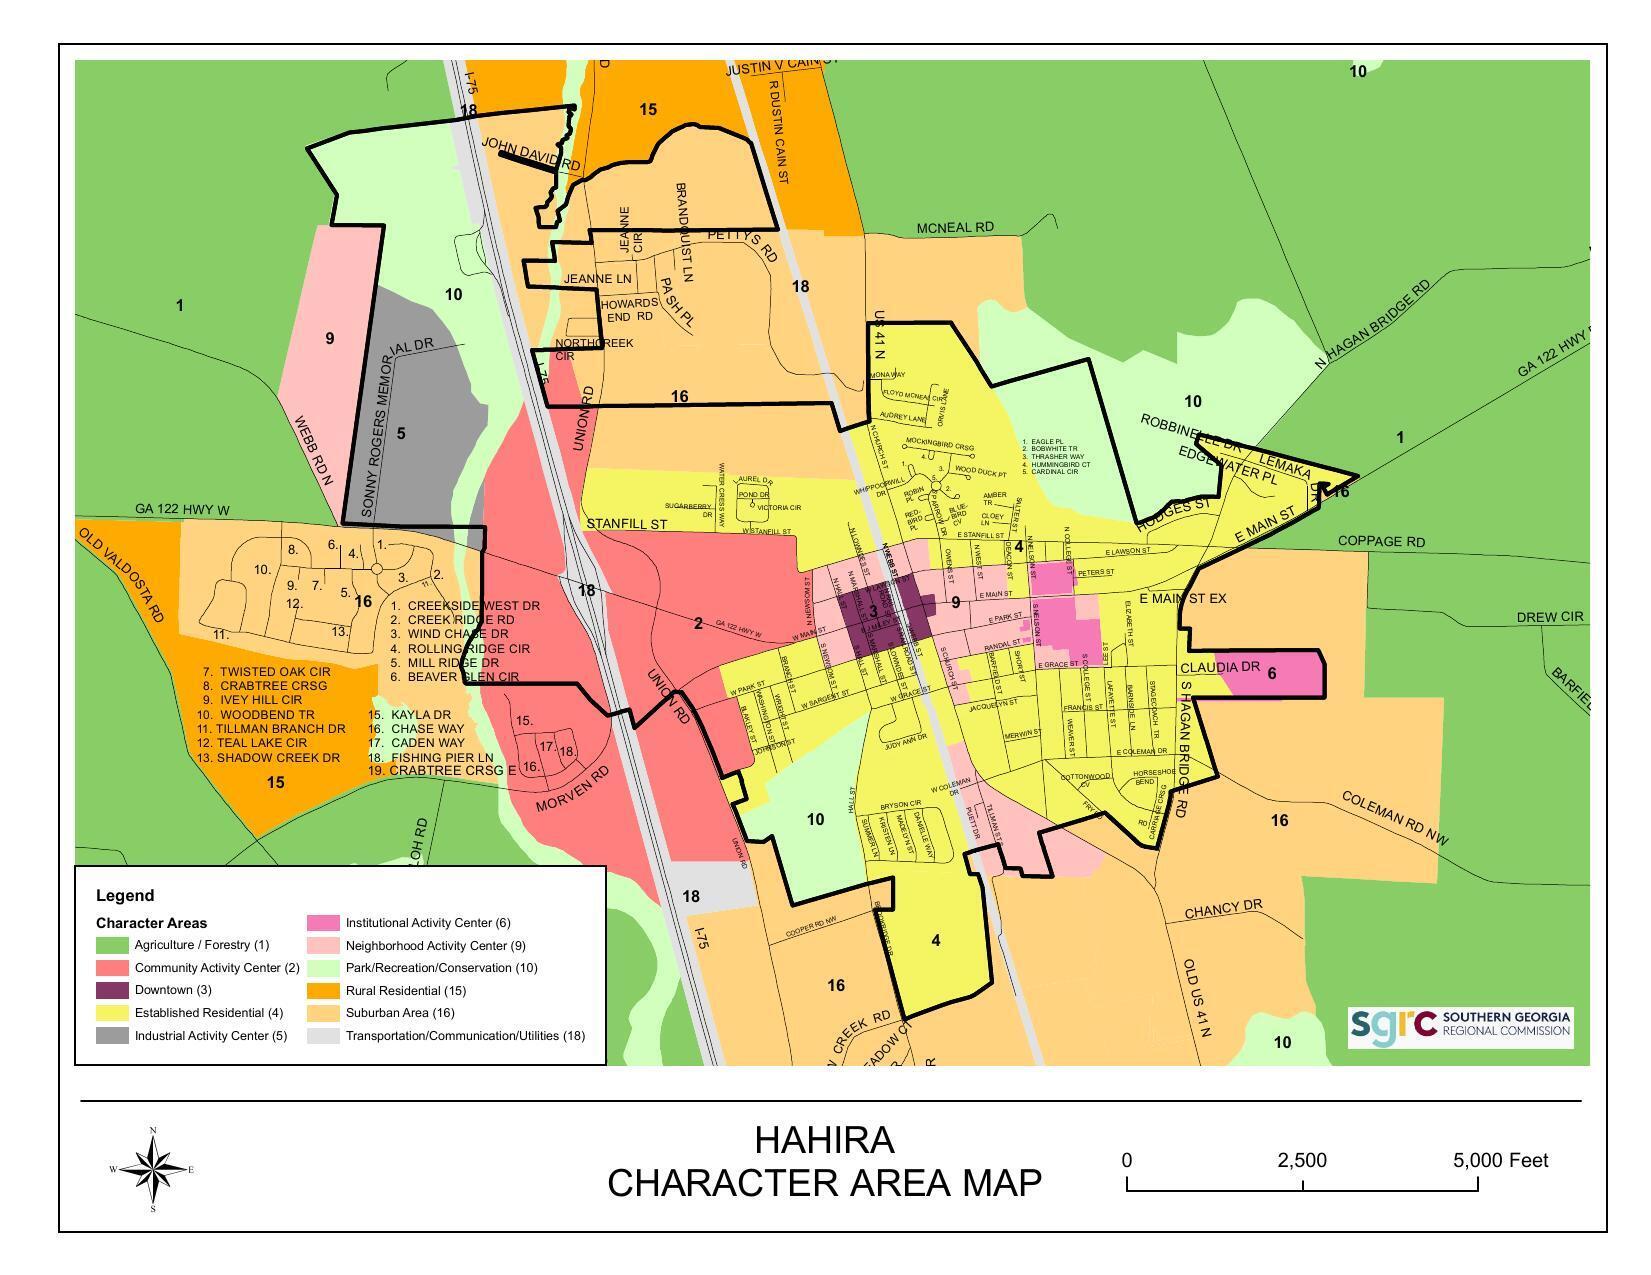 Hahira Character Area Map, courtesy Elizabeth Backe, SGRC